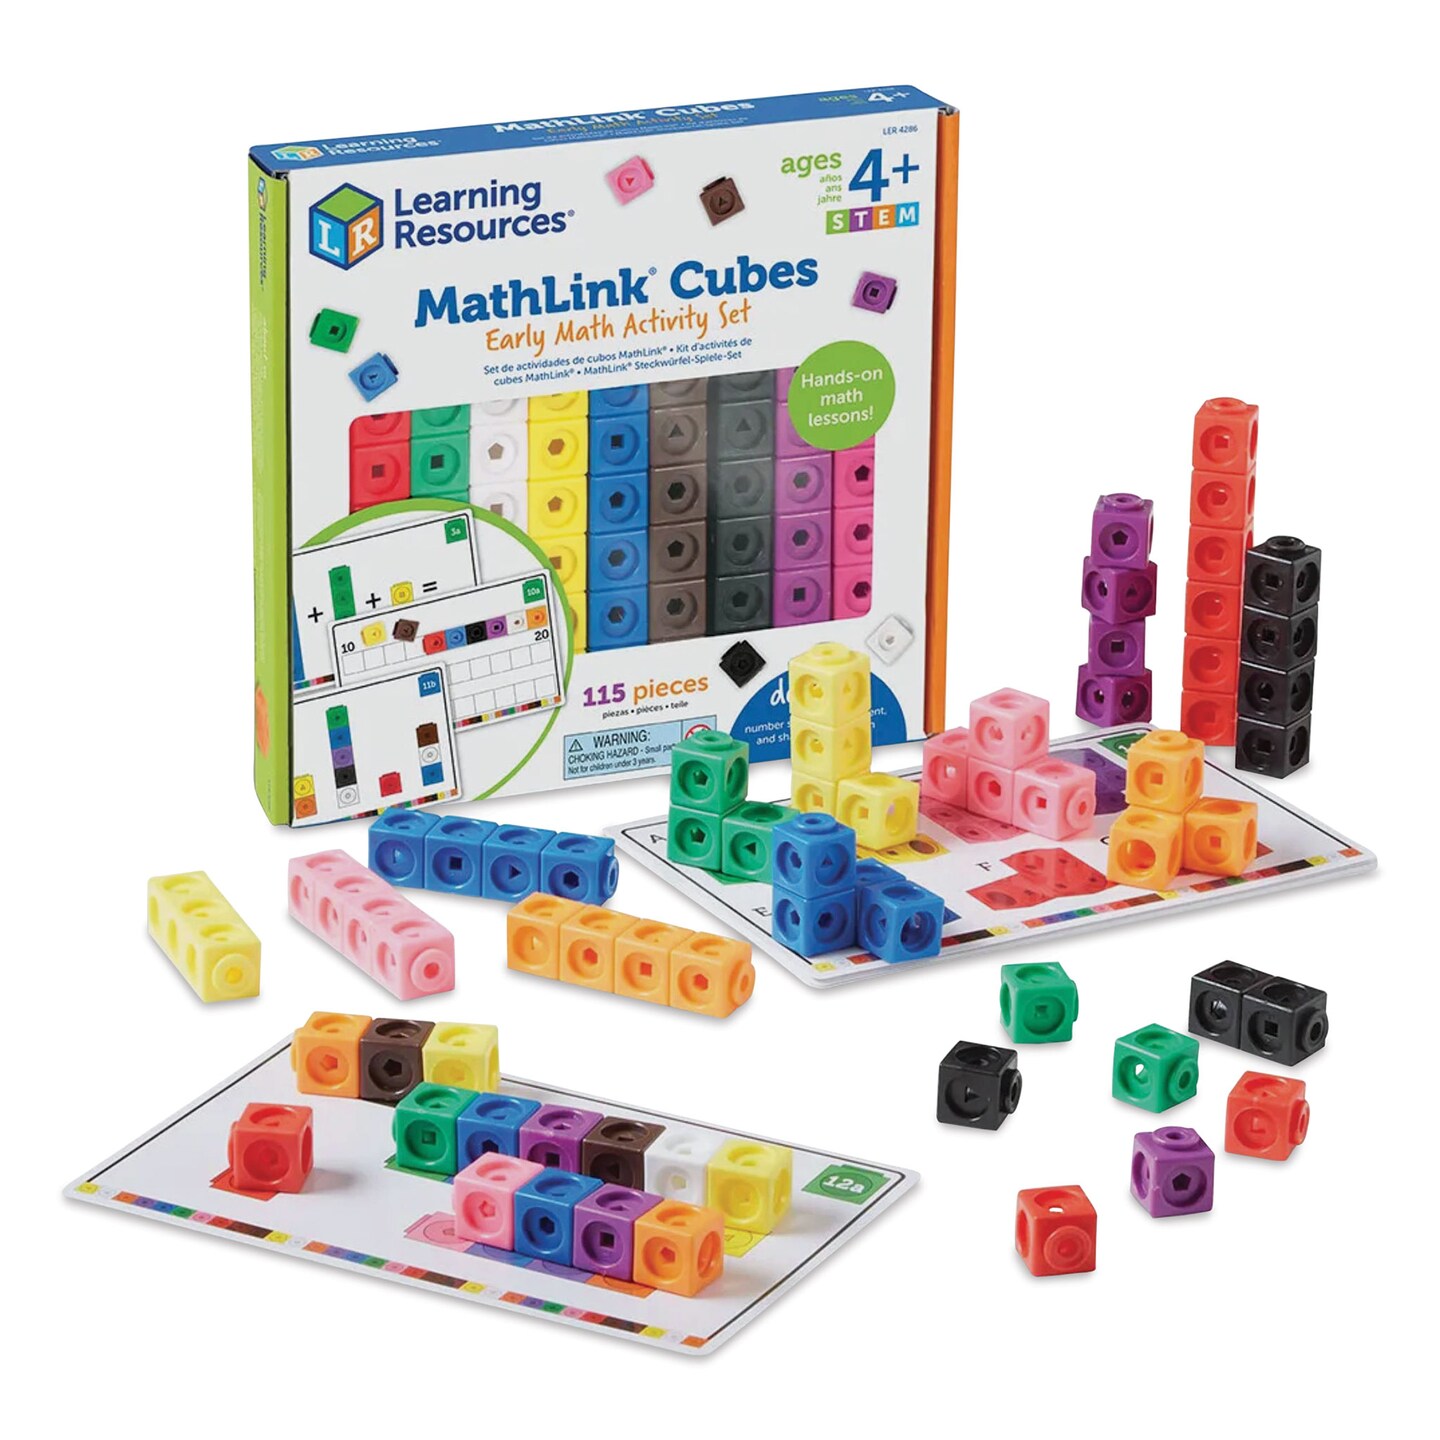 MathLink Cubes Activity Set - Early Math